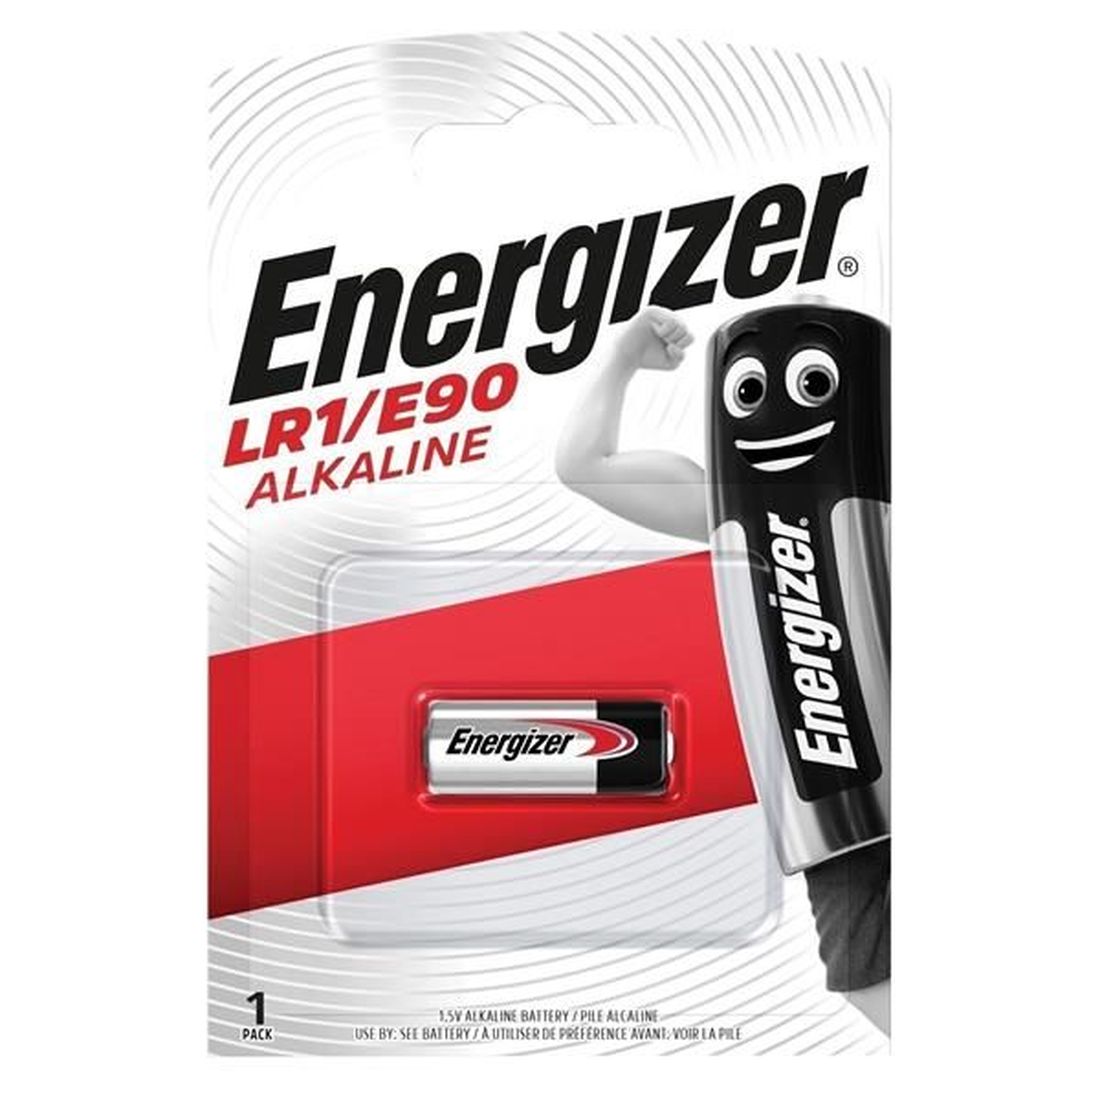 Energizer LR1 Electronic Battery (Single)   